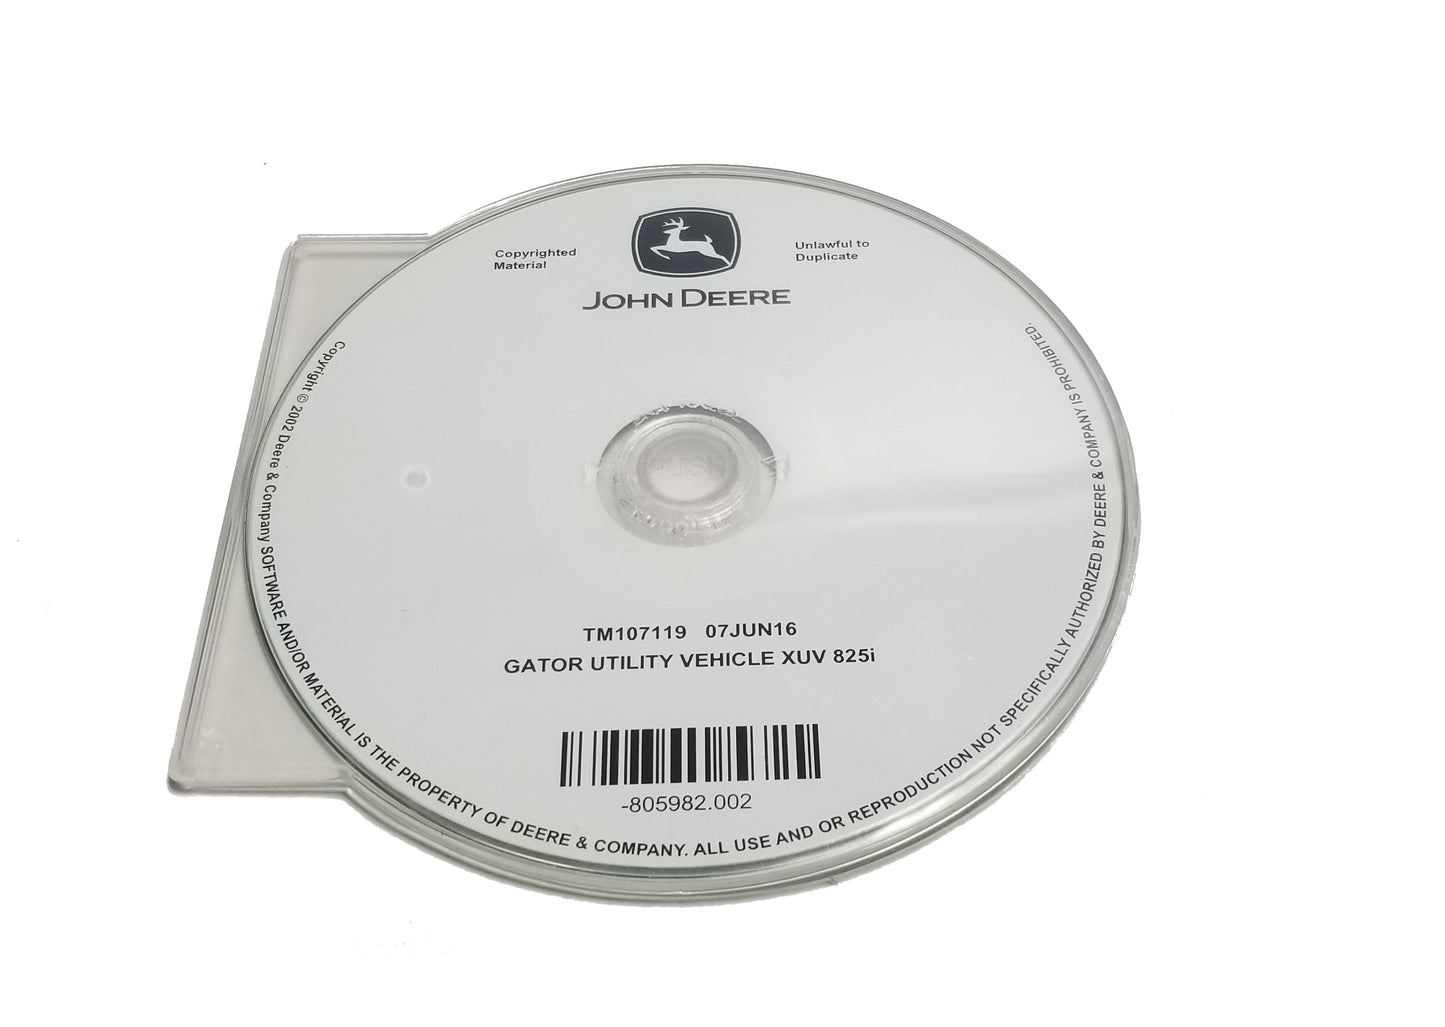 John Deere XUV825i Gator Utility Vehicle Technical CD Manual - TM107119CD